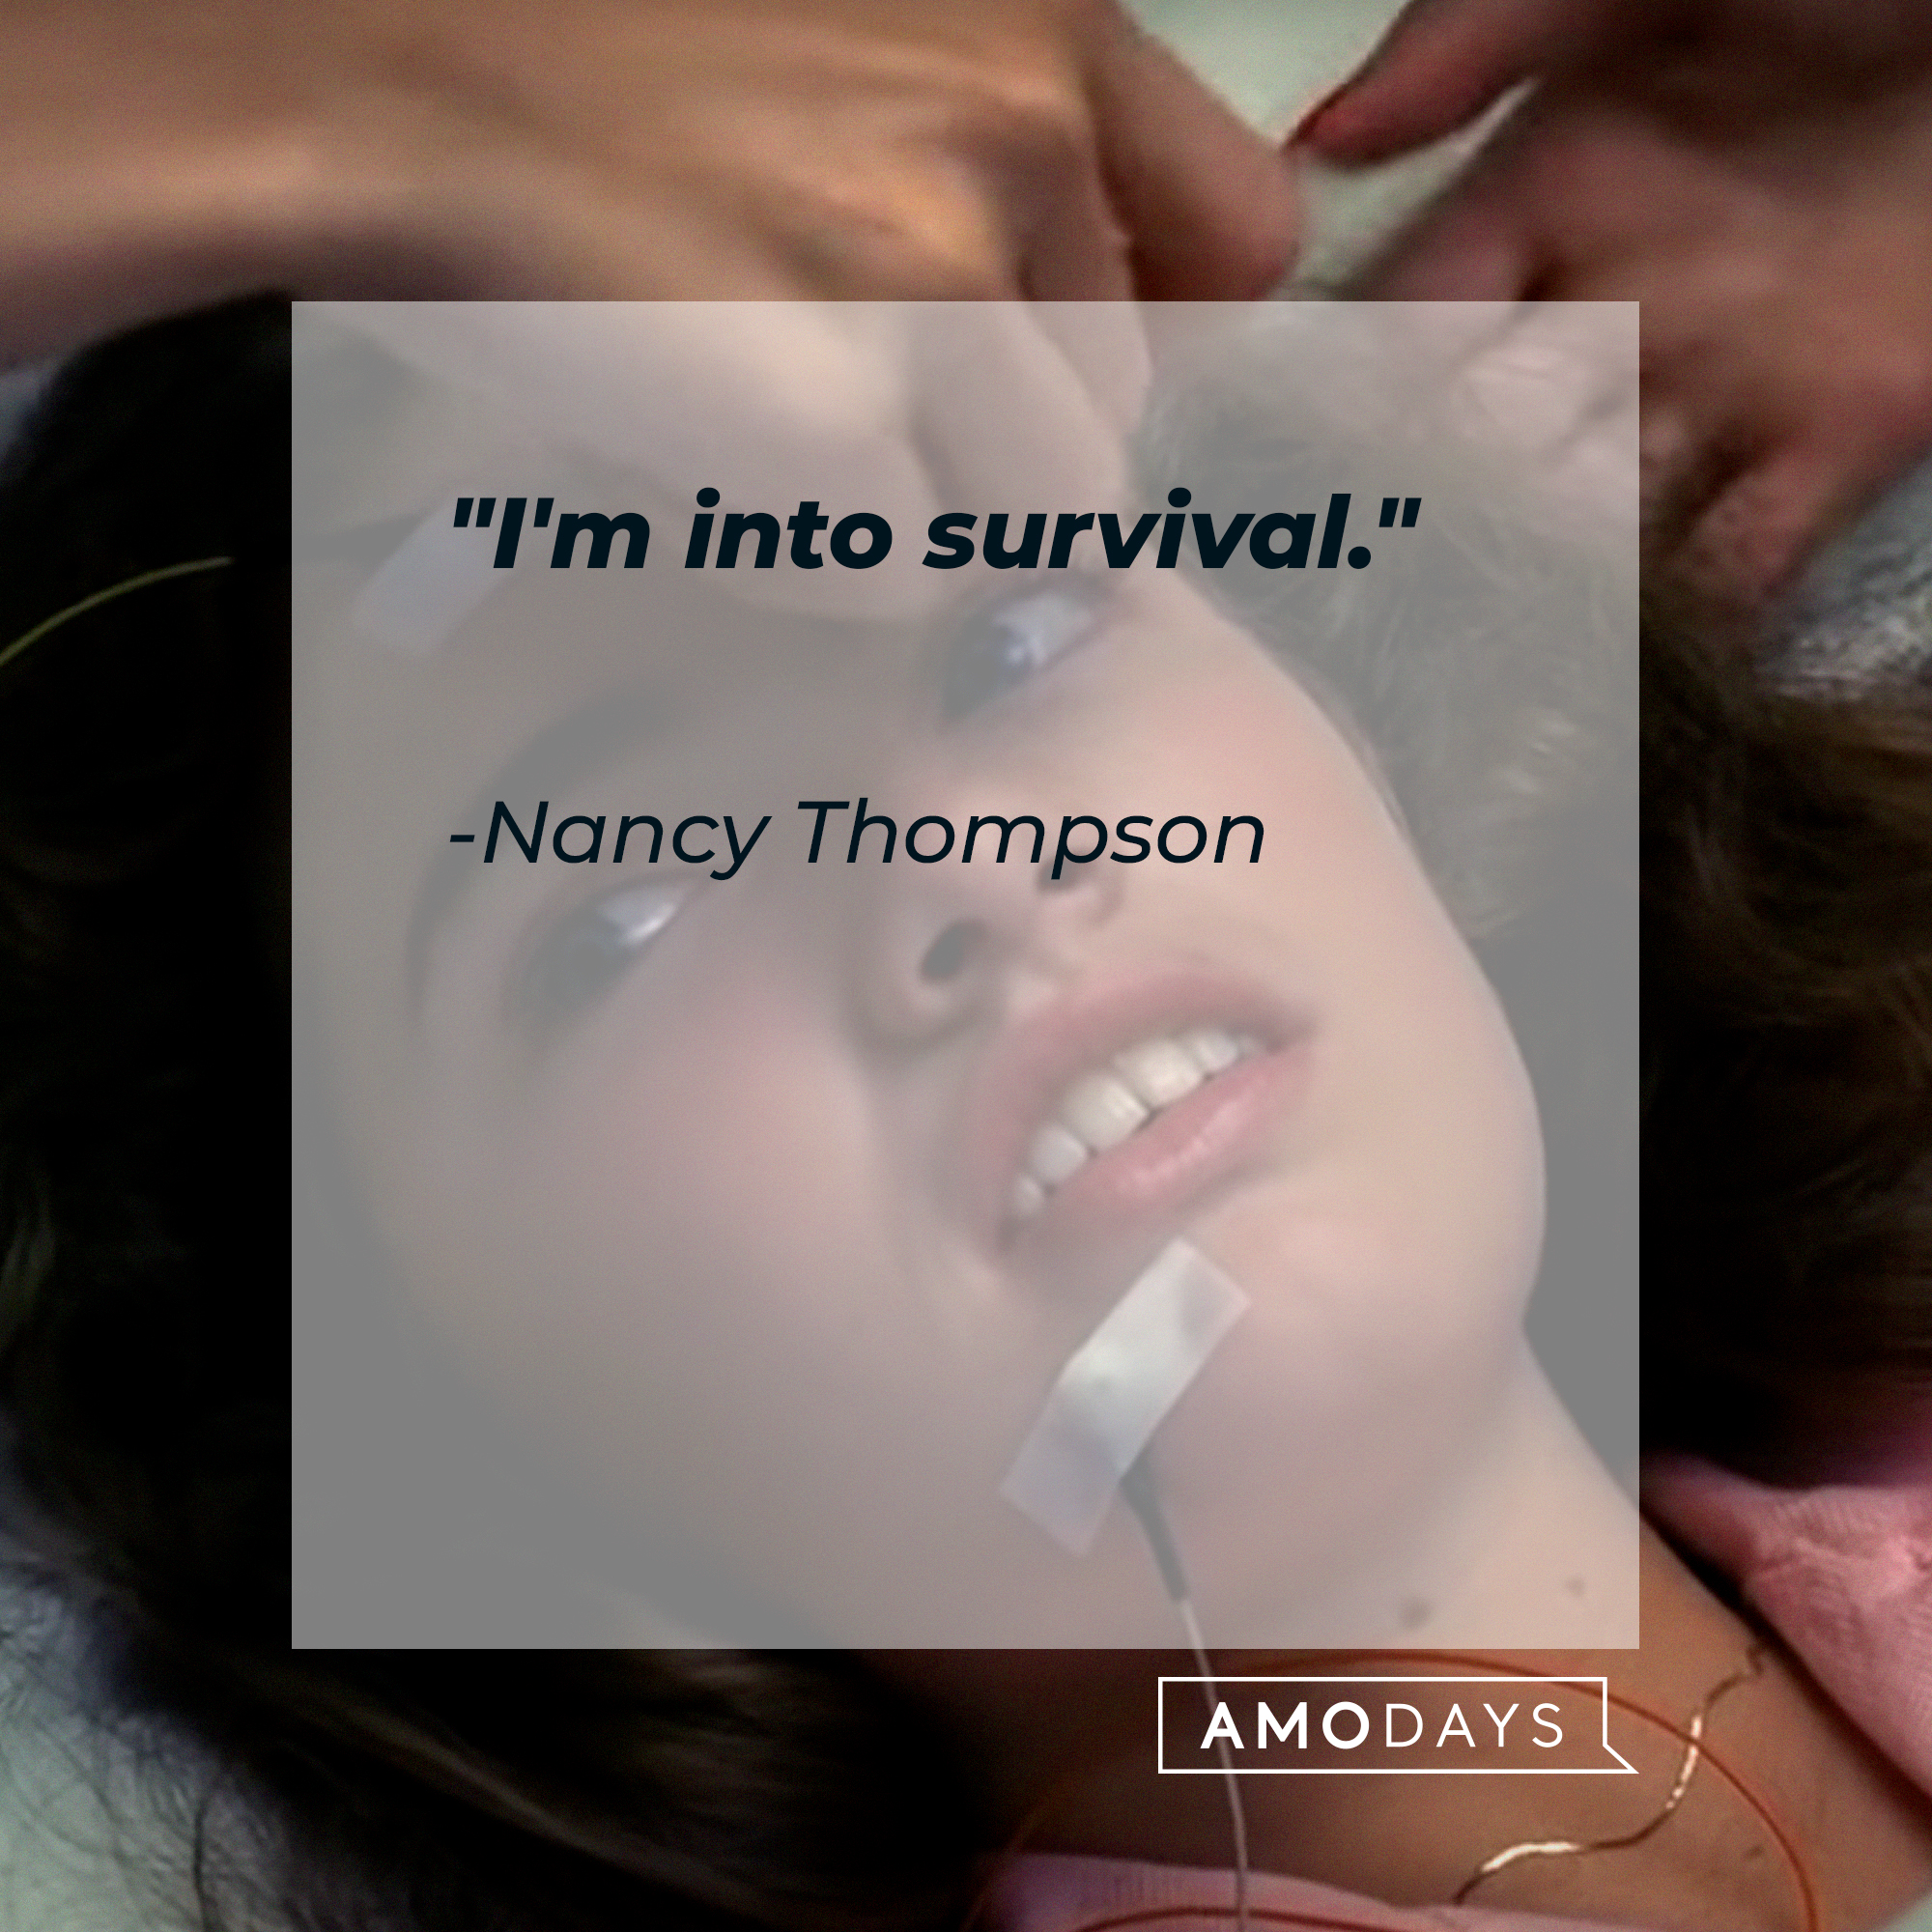 Nancy Thompson's quote: "I'm into survival." | Source: Facebook/ANightmareonElmStreet